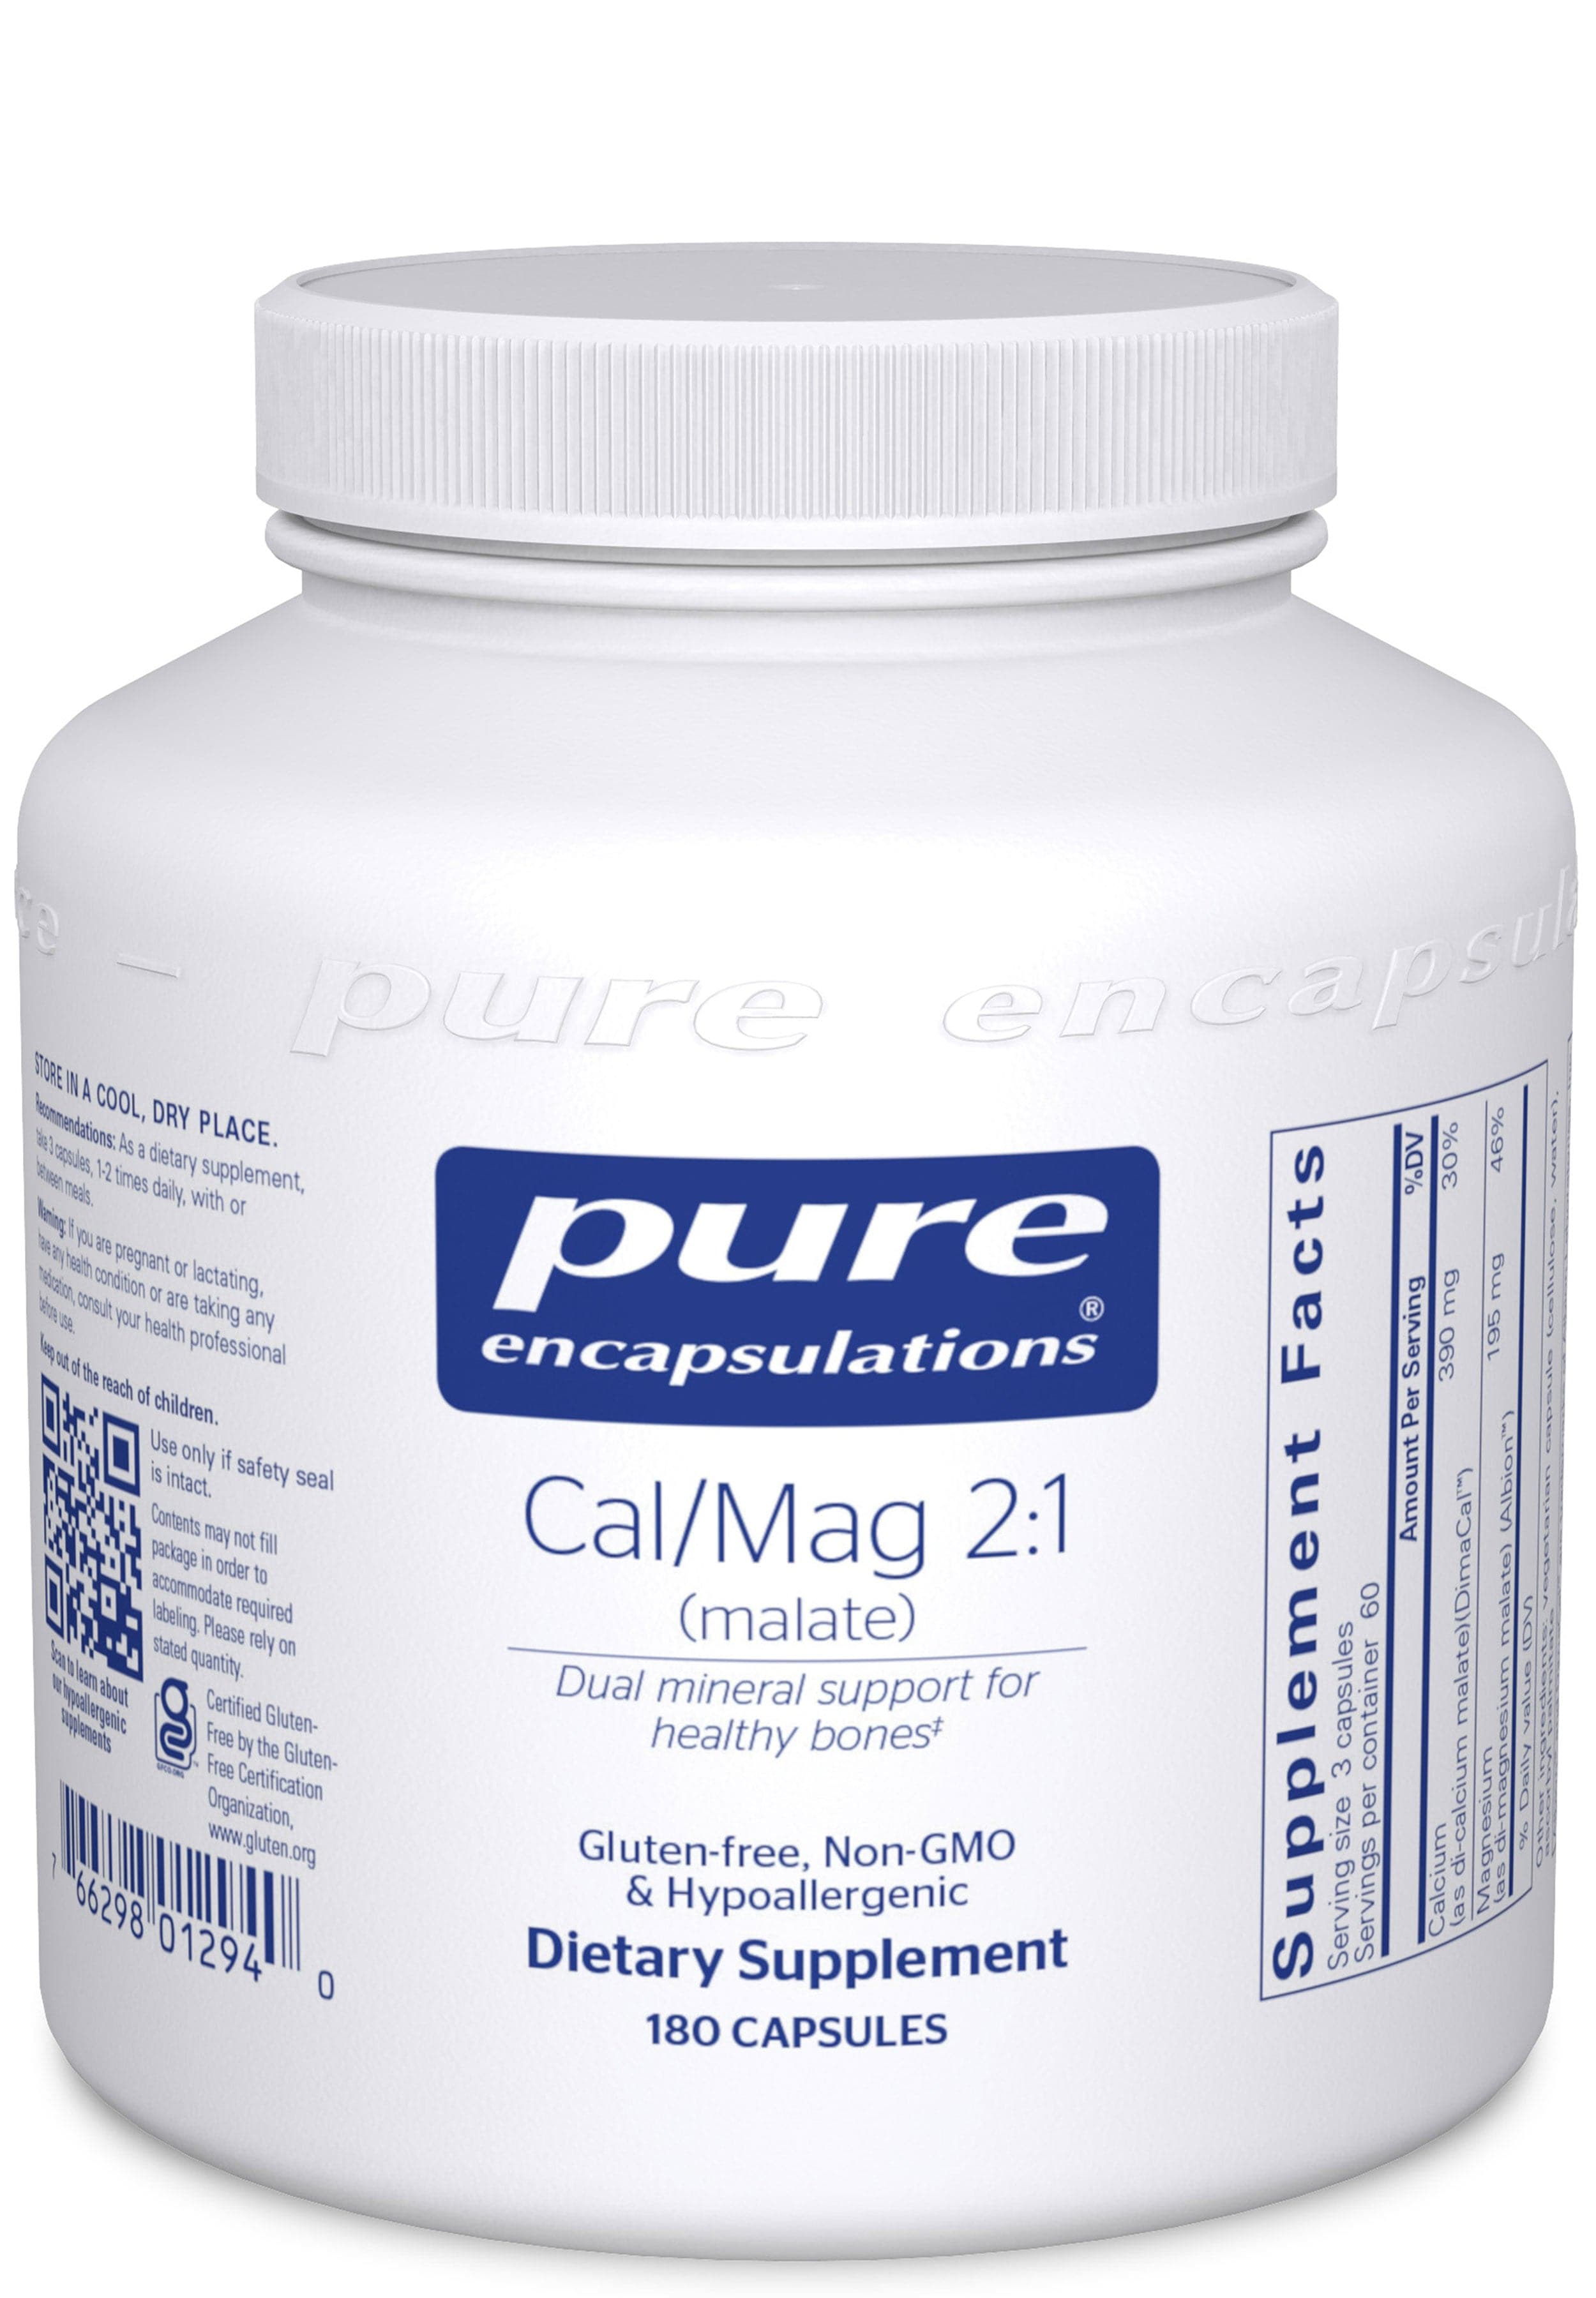 Pure Encapsulations Cal/Mag 2:1 (malate)